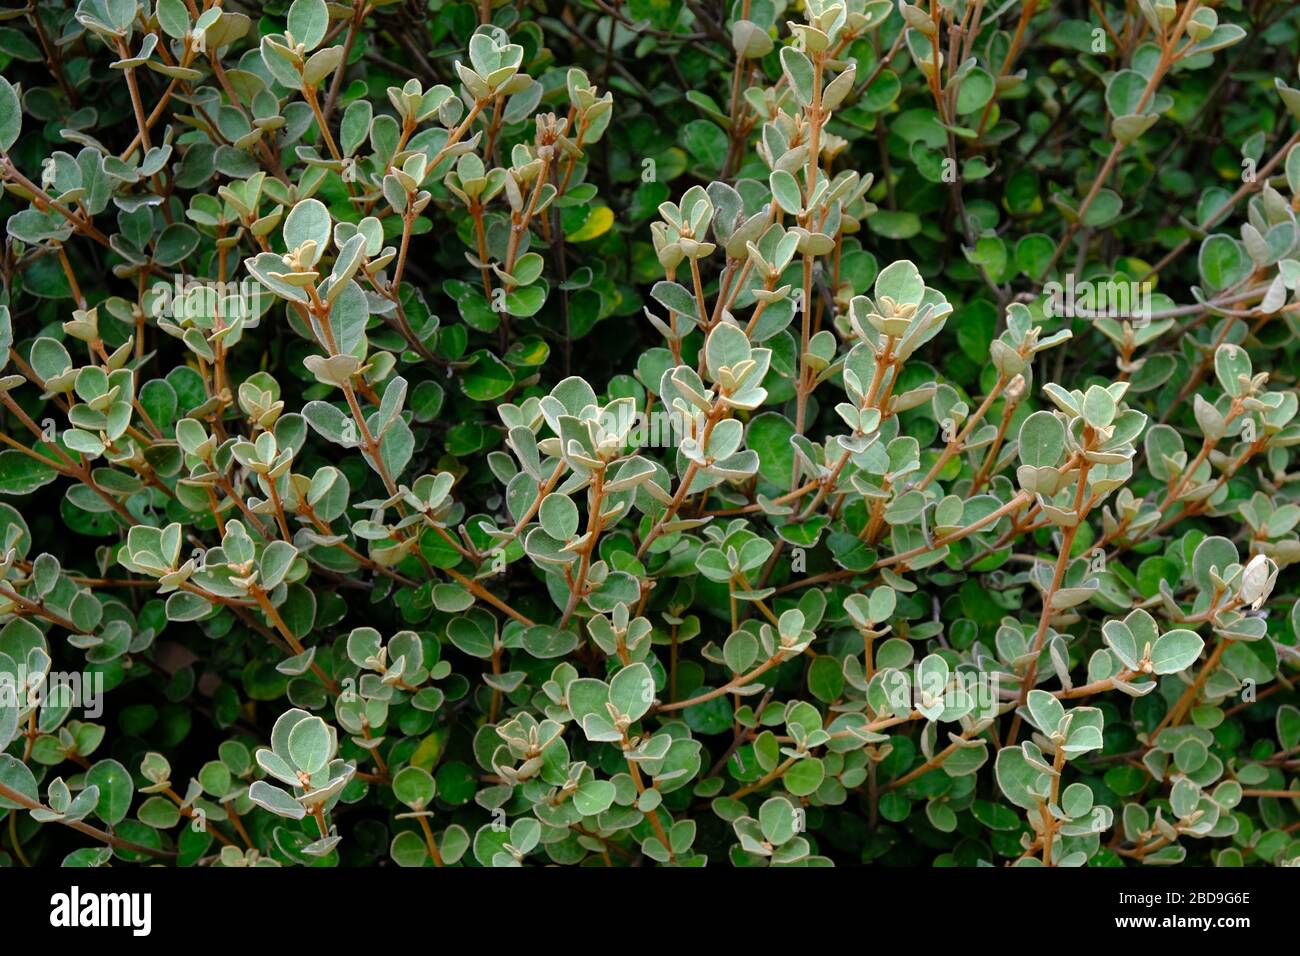 Correa alba leaves and branches closeup. A native Australian plant. Stock Photo